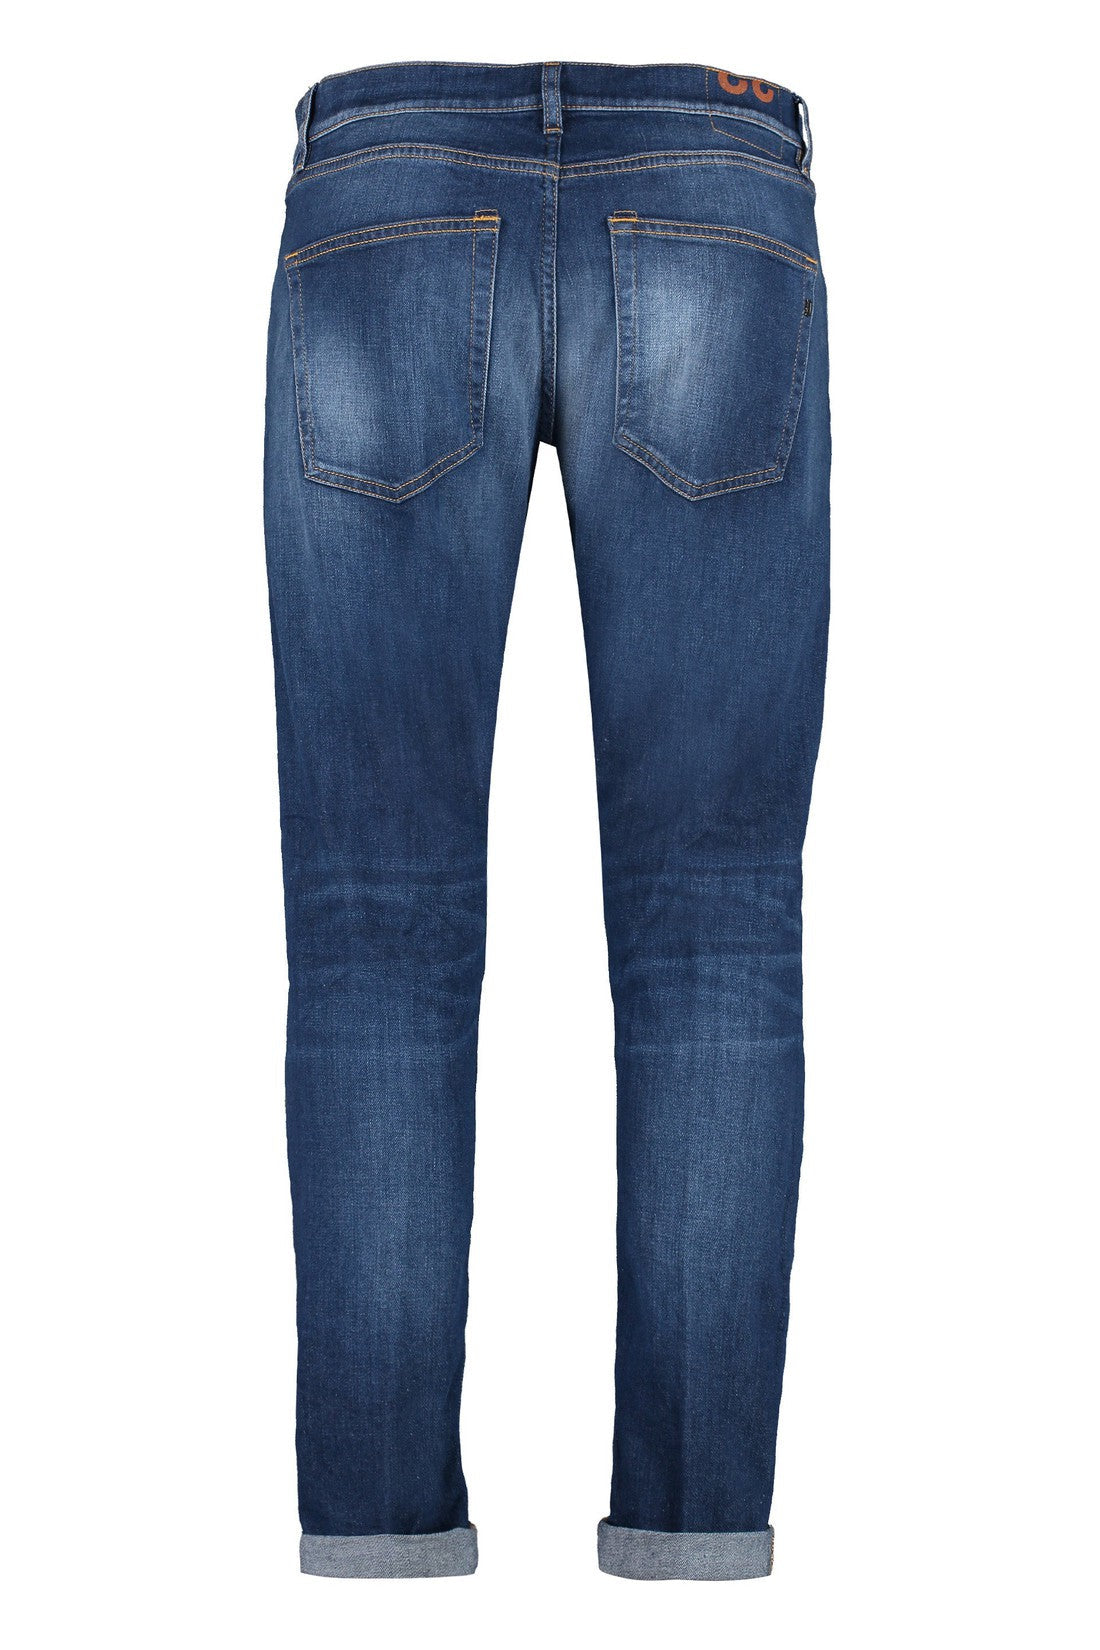 Dondup-OUTLET-SALE-Icon regular fit jeans-ARCHIVIST